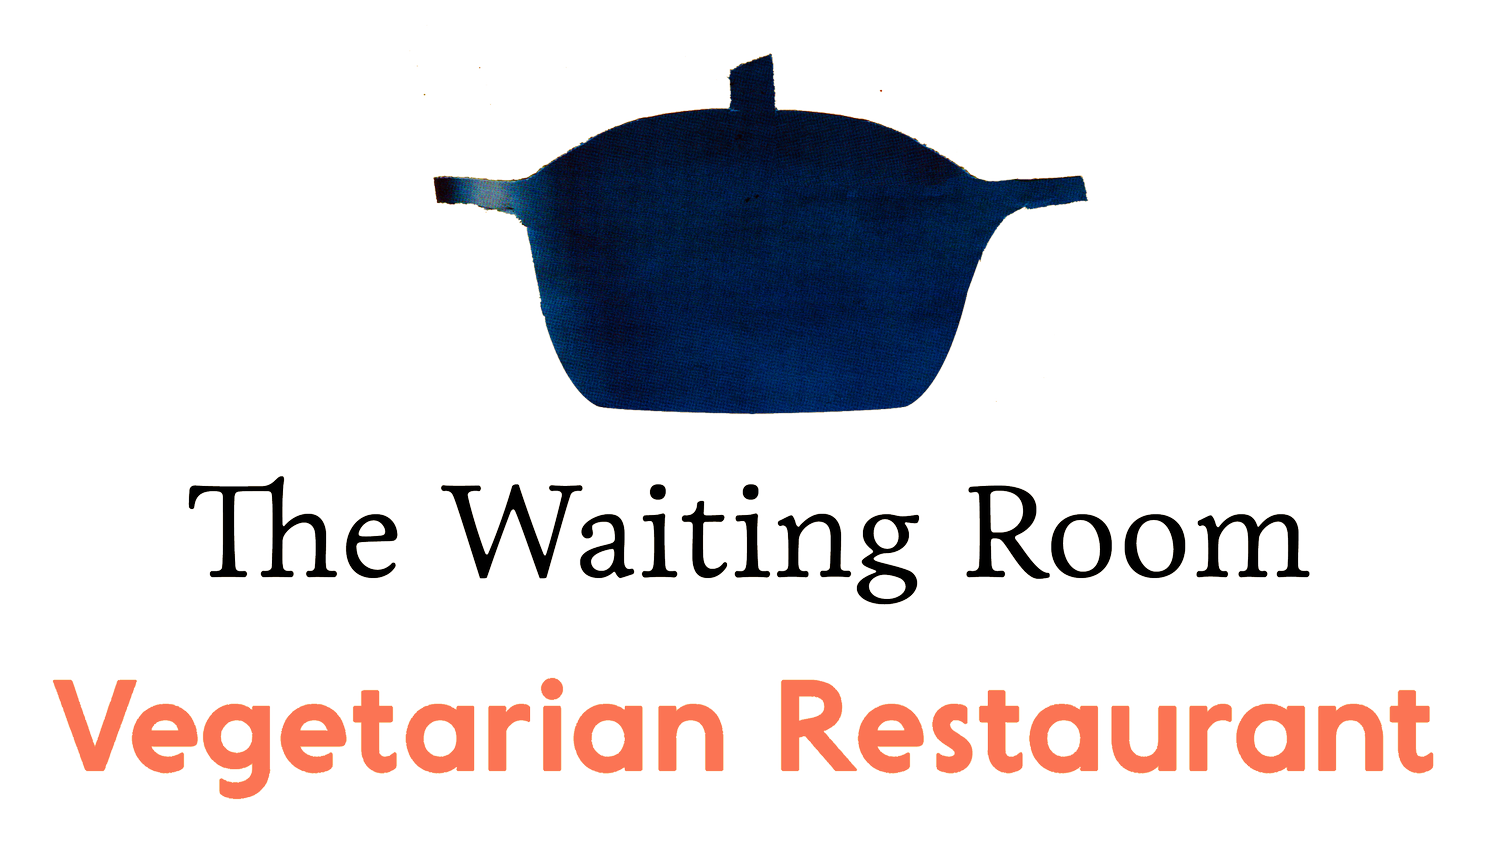 The Waiting Room Vegetarian Restaurant